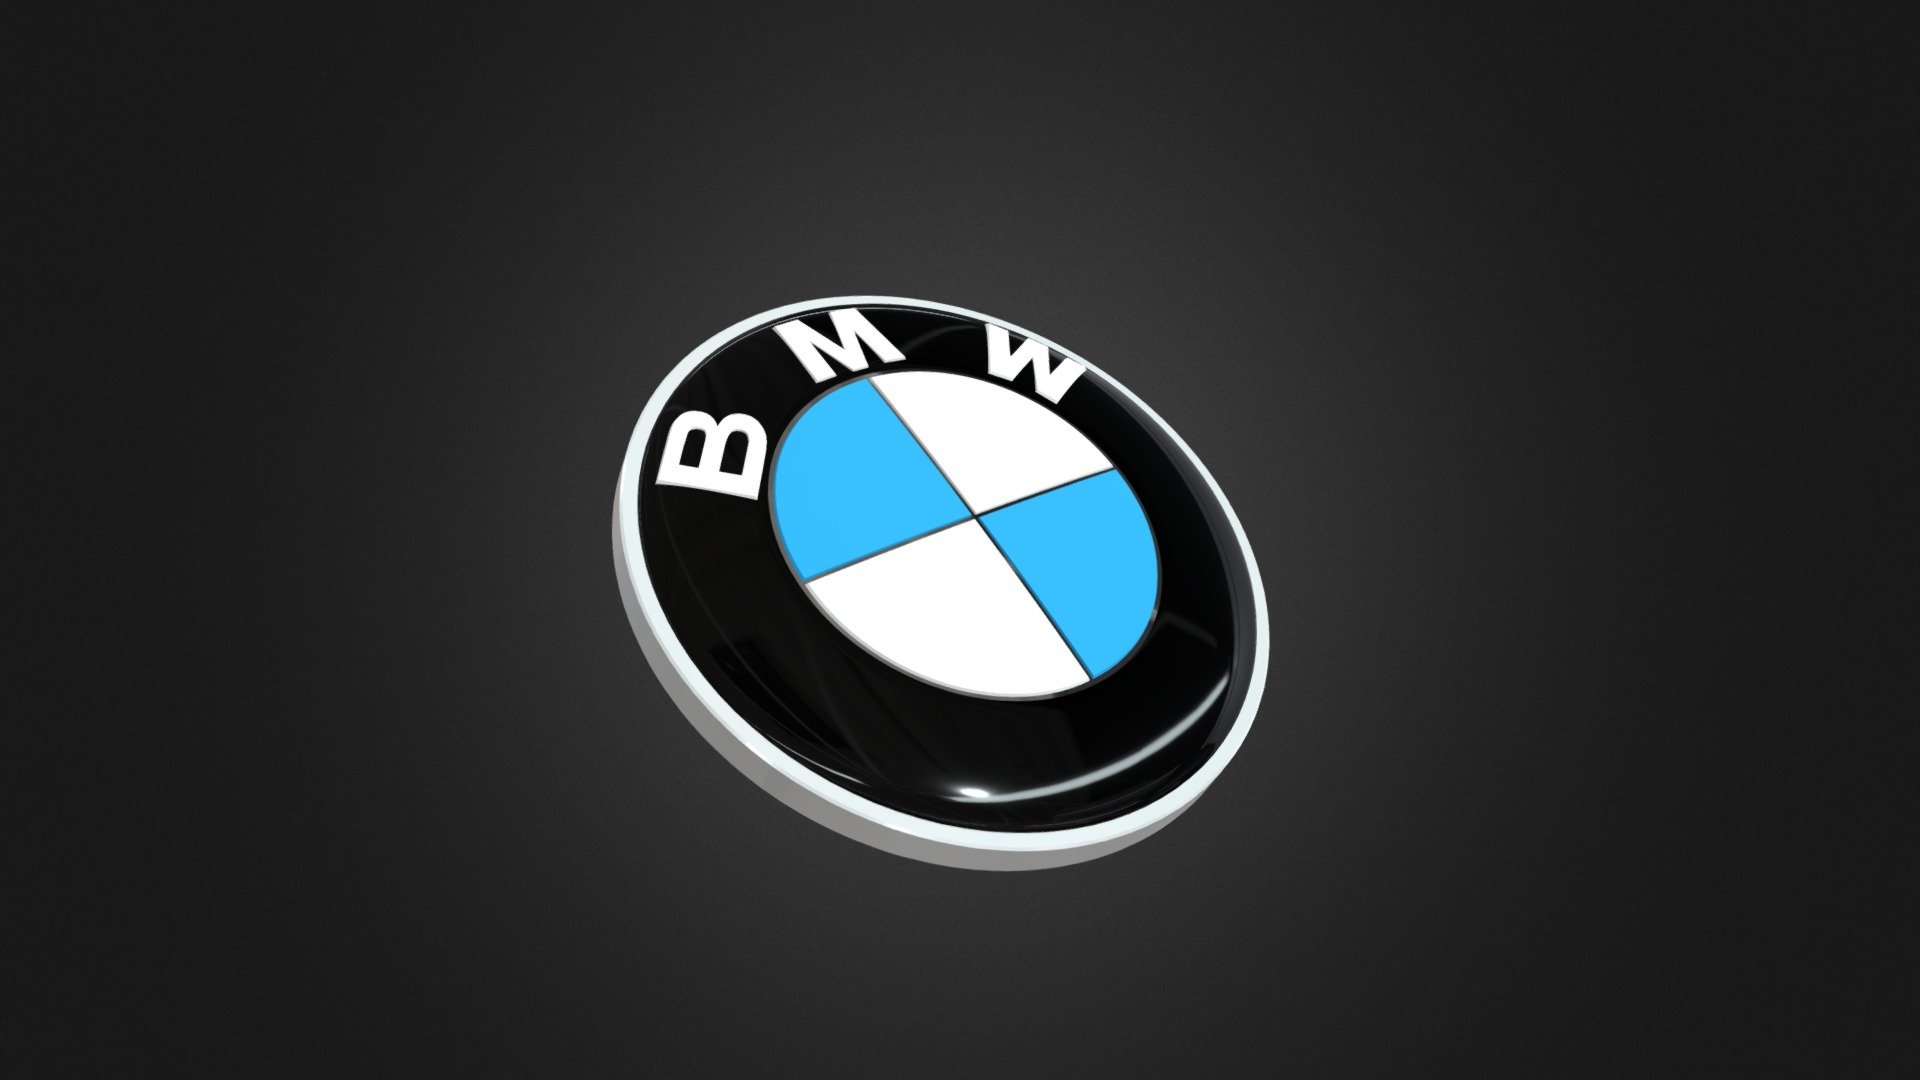 BMW M emblem (3D nalepka)